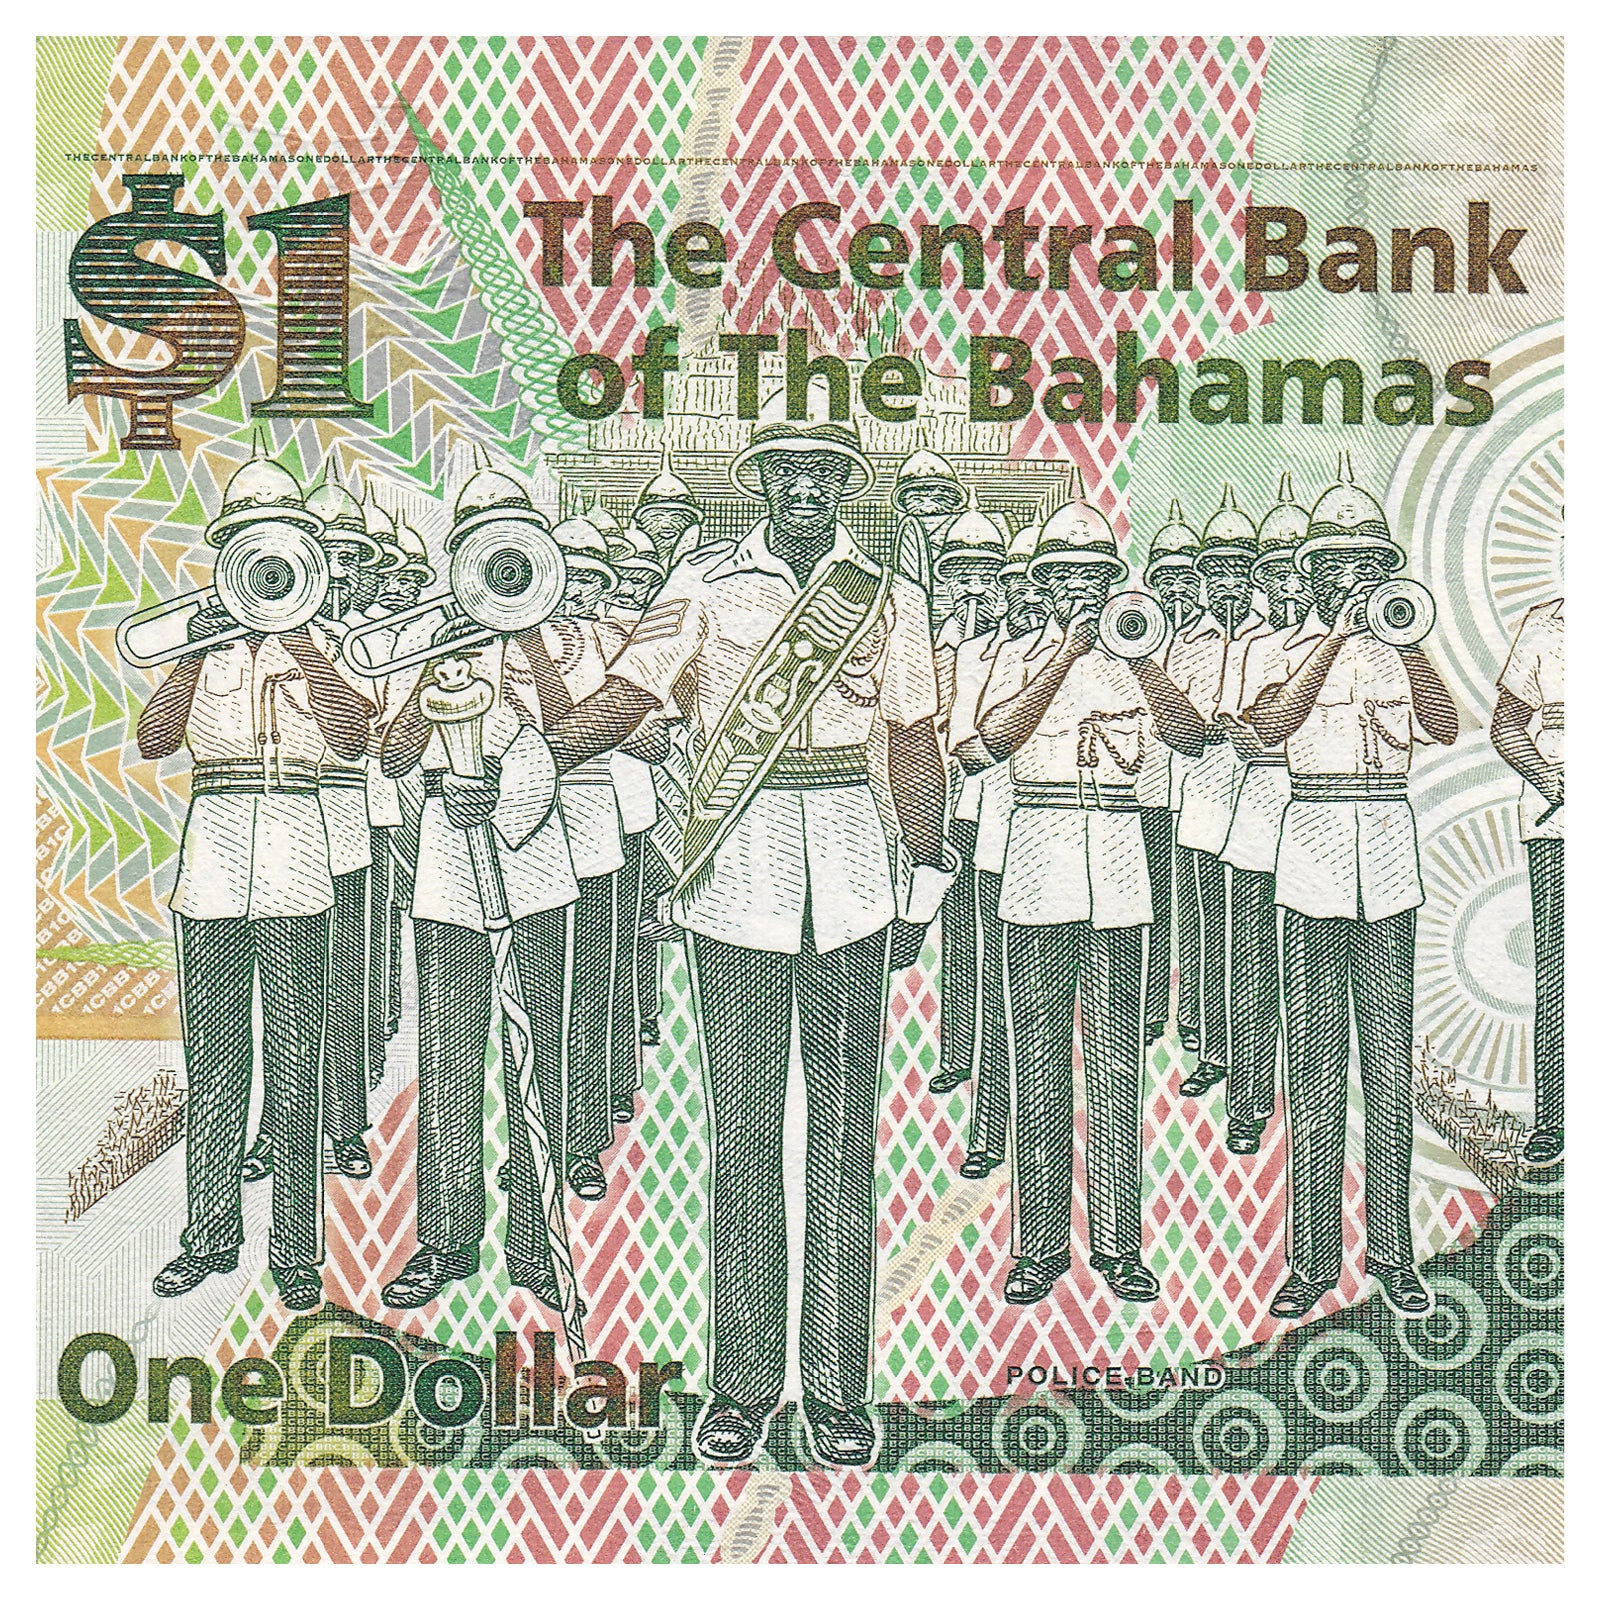 Bahamas 1 Dollar, 2008, B337a, P71, UNC - Robert's World Money - World Banknotes